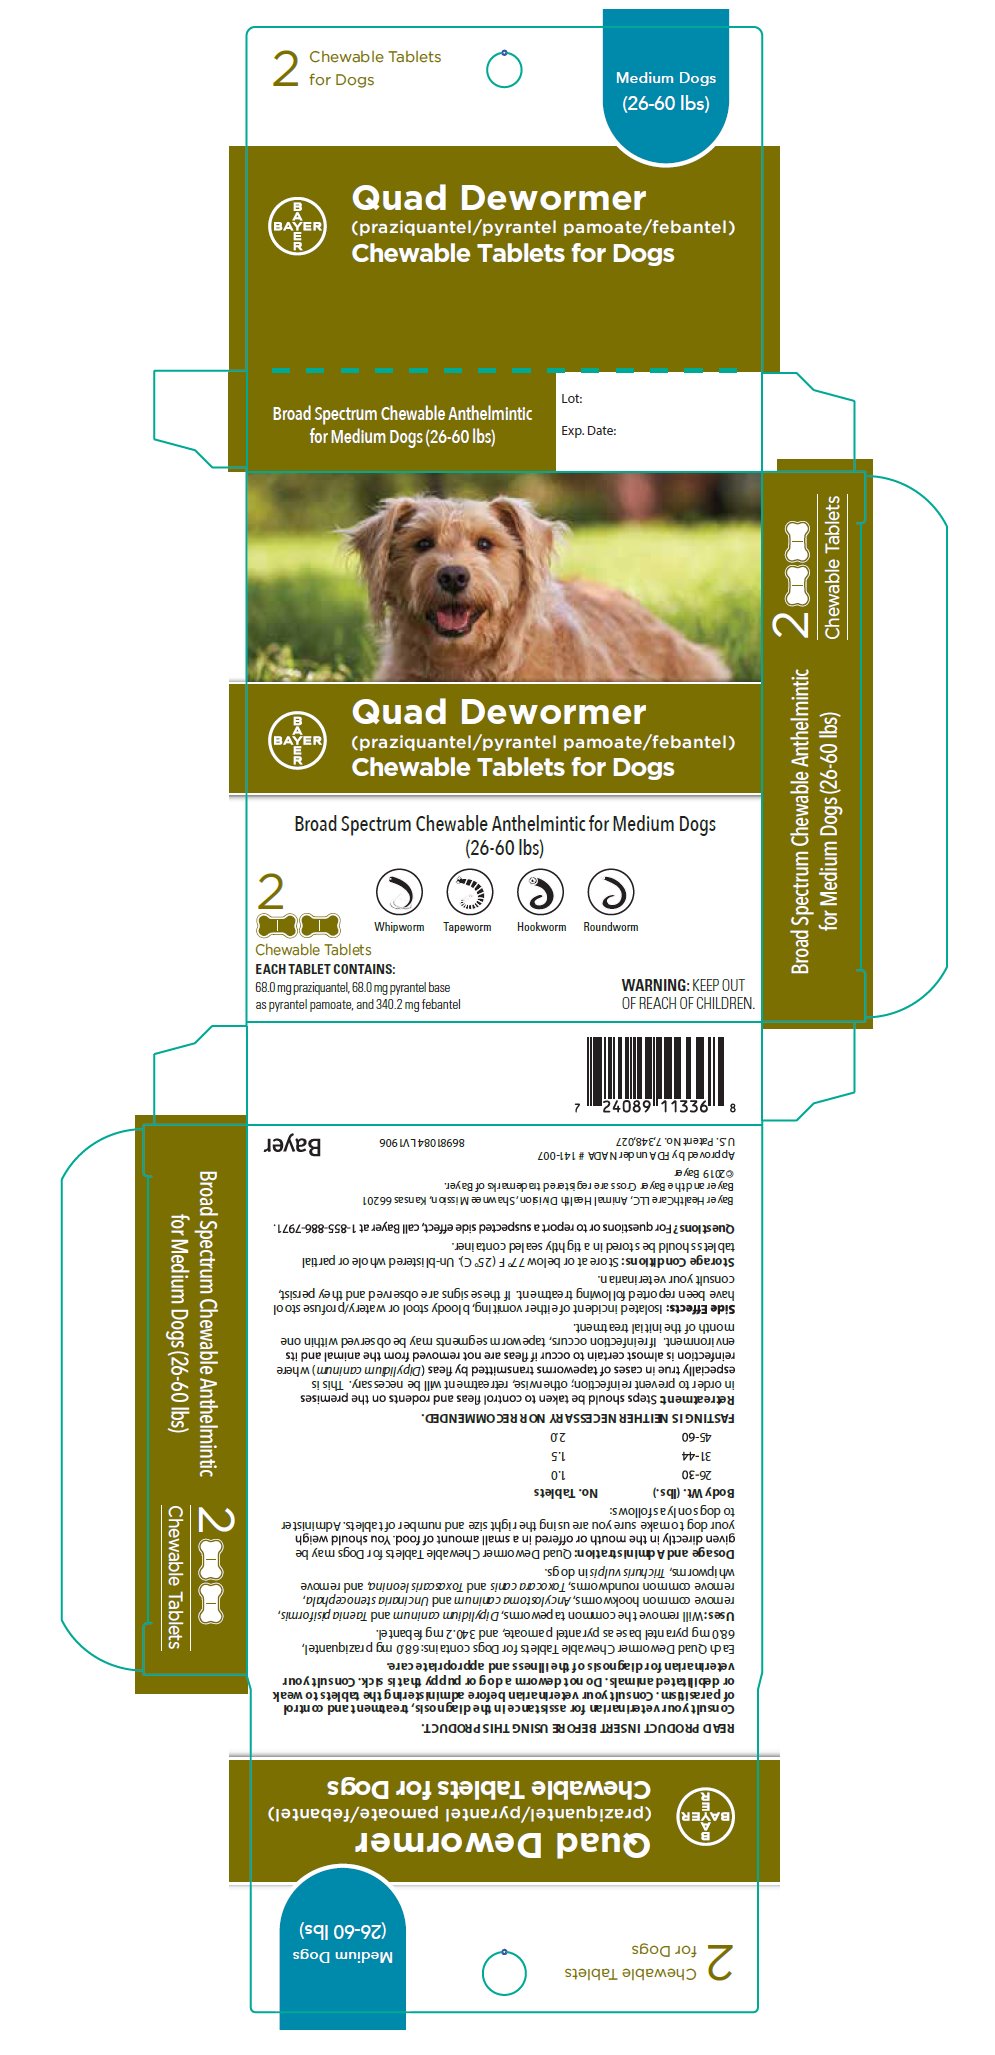 Quad Dewormer (praziquantel/pyrantel pamoate/febantel) Chewable Tablets for Dogs label - medium dogs (26-60 lbs)